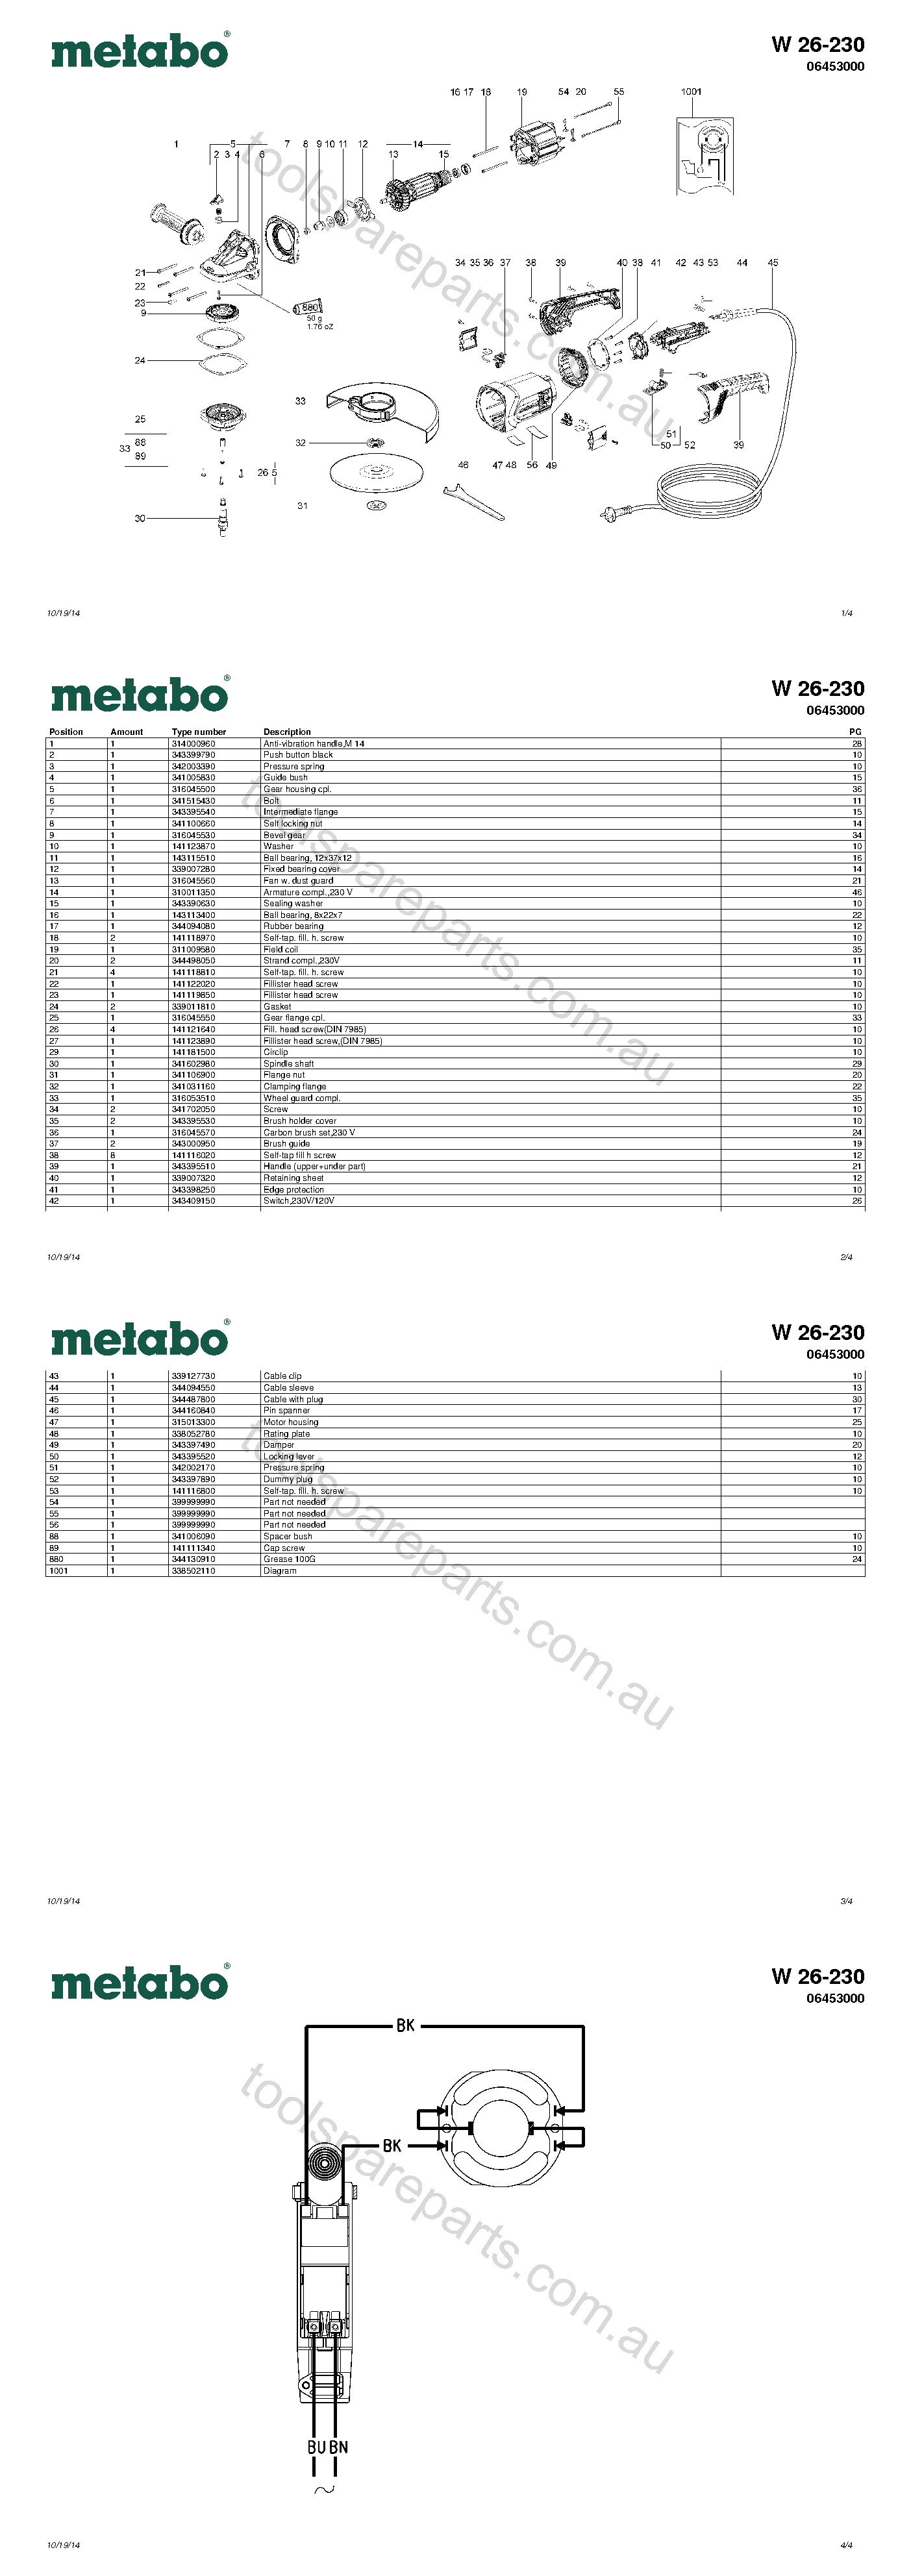 Metabo W 26-230 06453000  Diagram 1